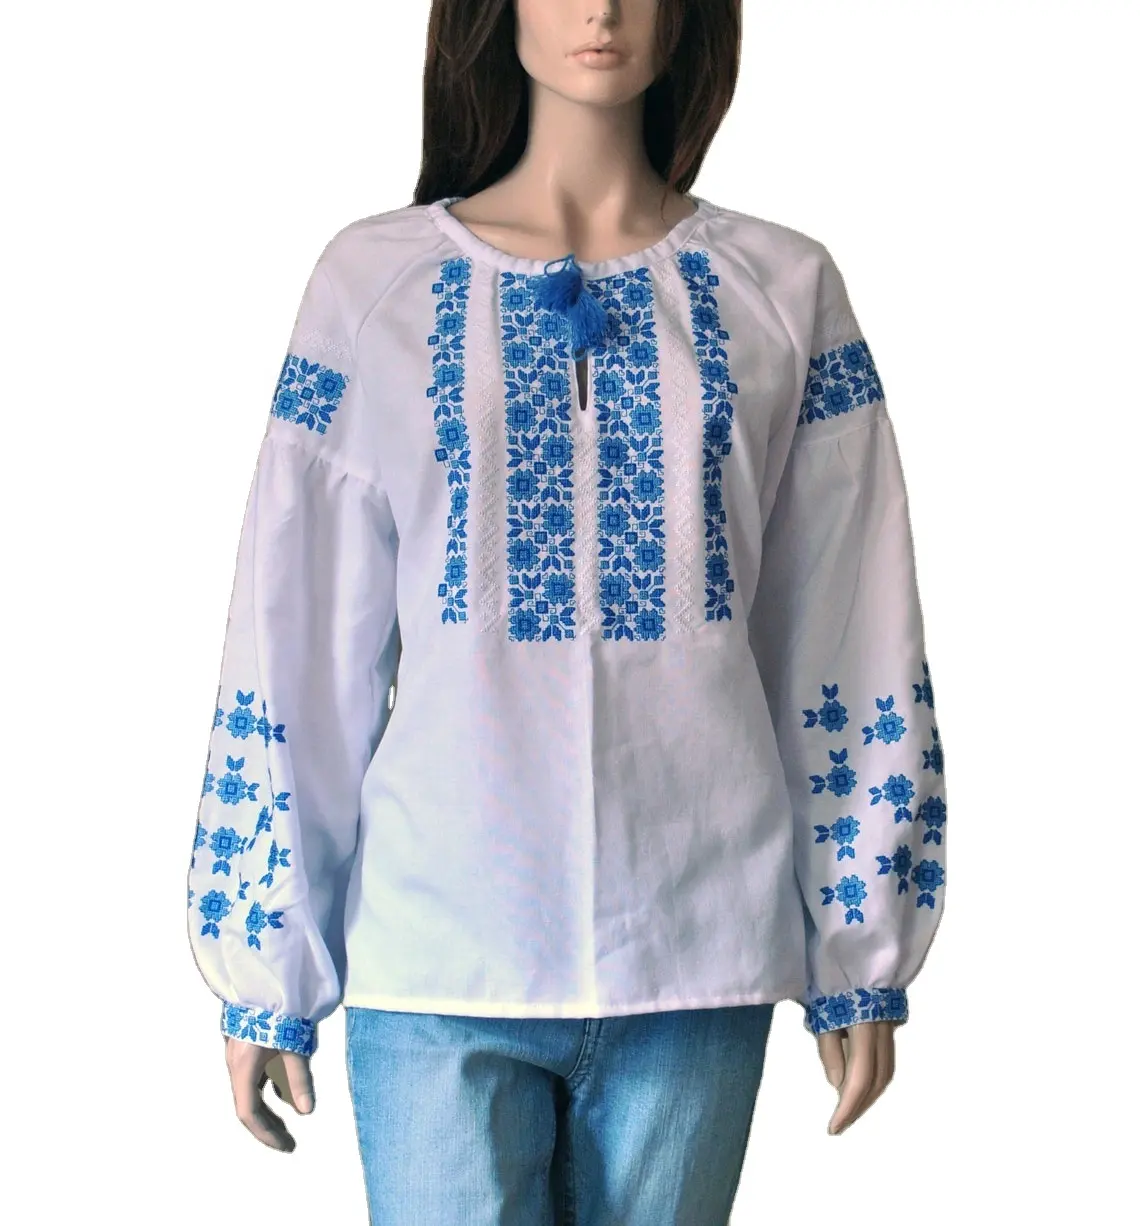 Atasan pakaian pesta desainer modis terbaik katun blus Wanita Atasan kasual India modis